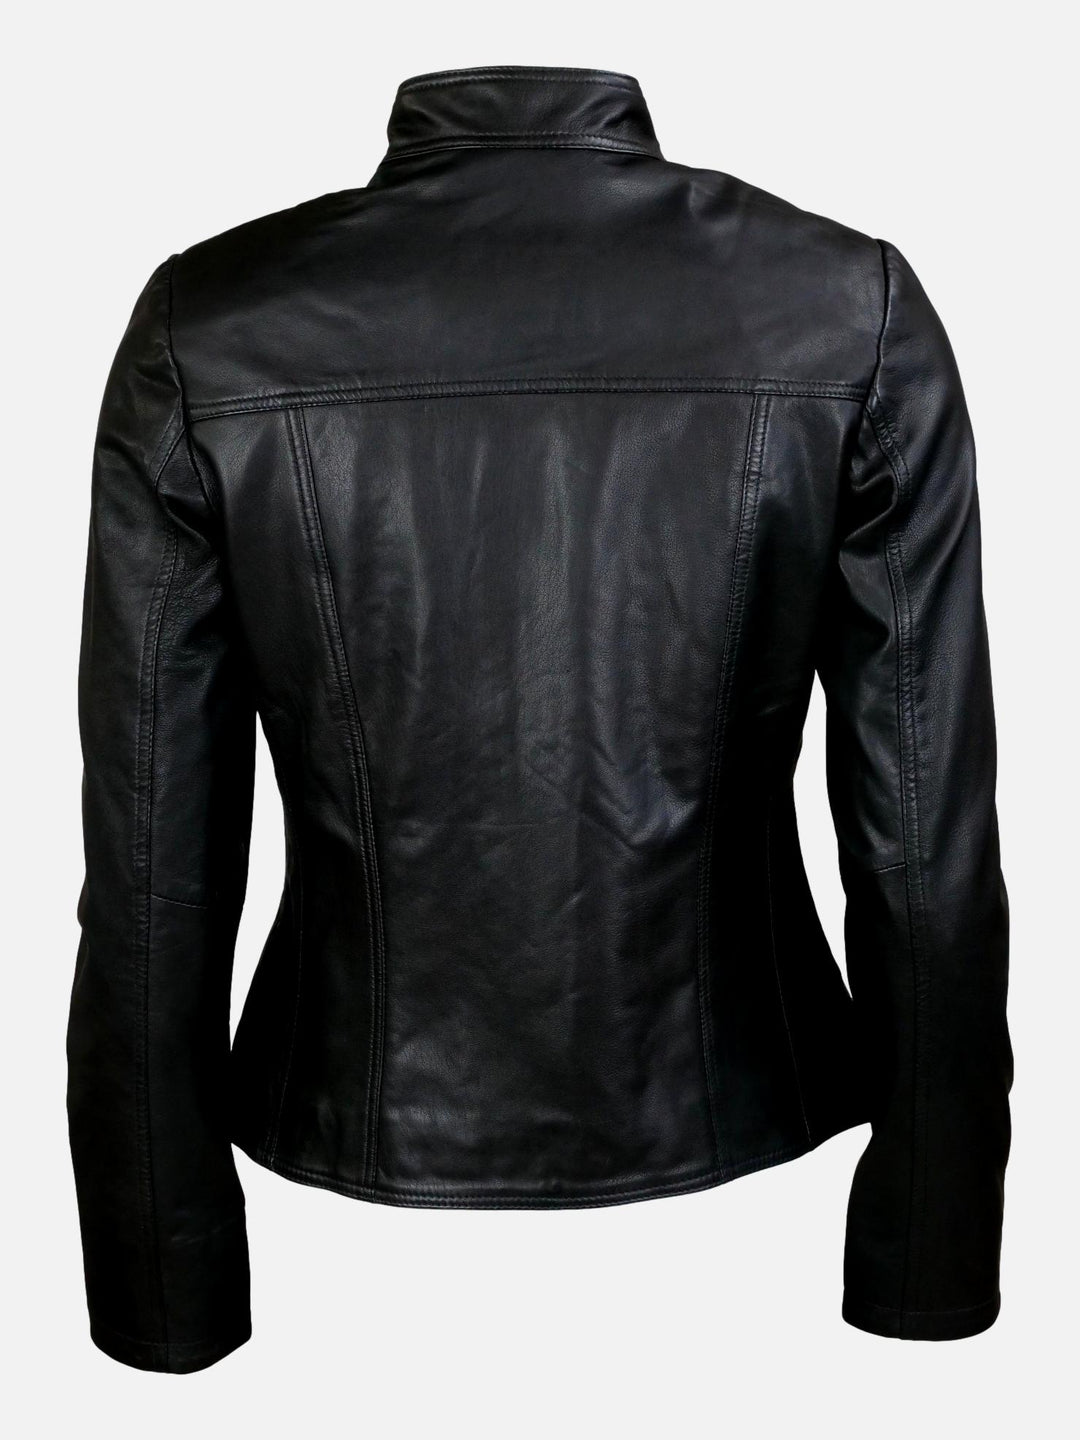 Merry - Nappa Leatherjacket - Women - Black